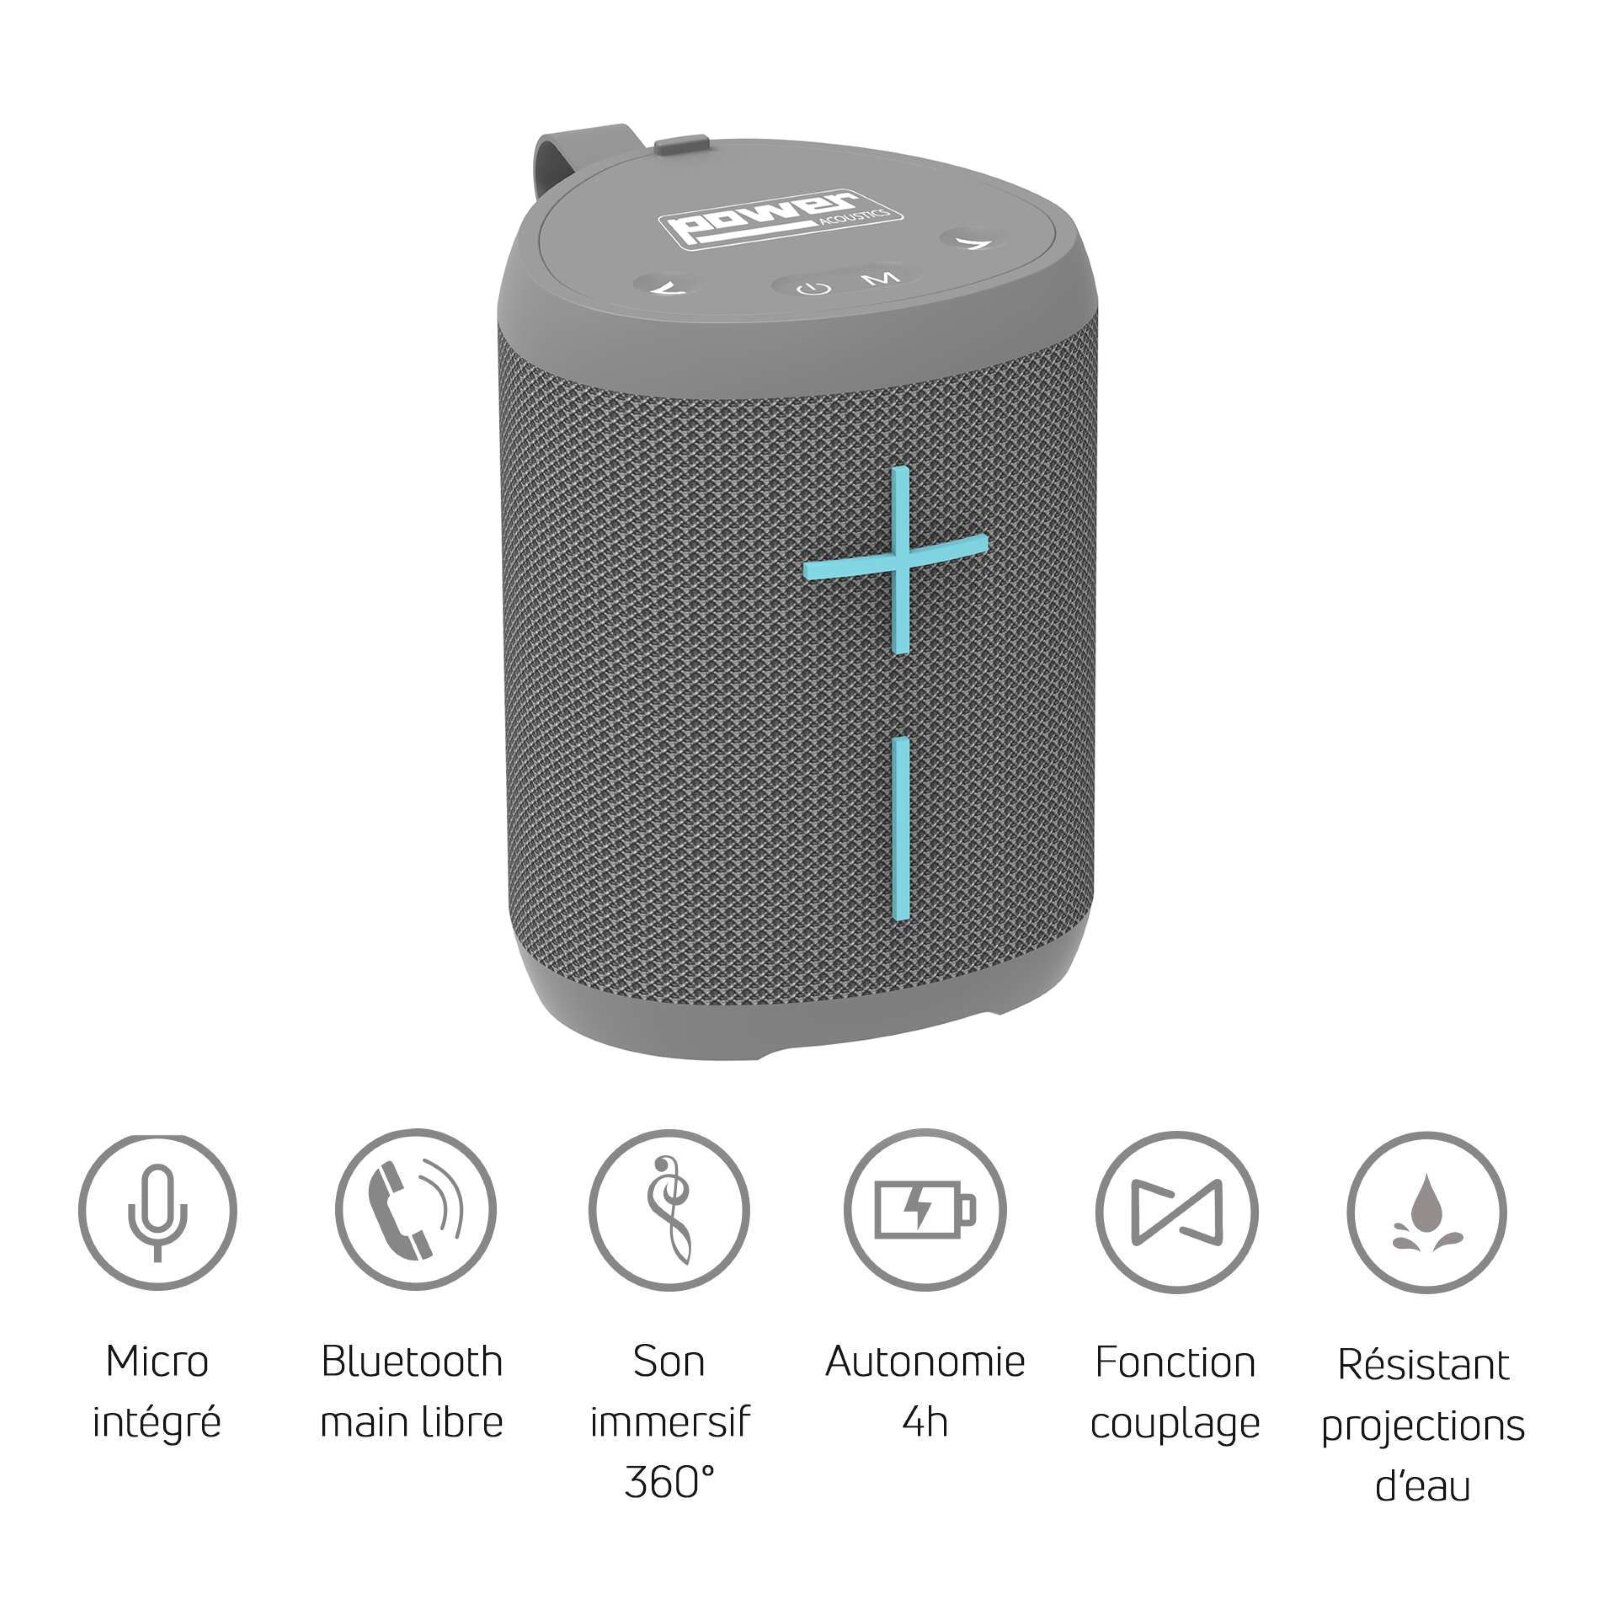 Power Acoustics GETONE 20 GRAY Compact Portable Bluetooth Speaker - Gray Color (GETONE 20 GR) : photo 1